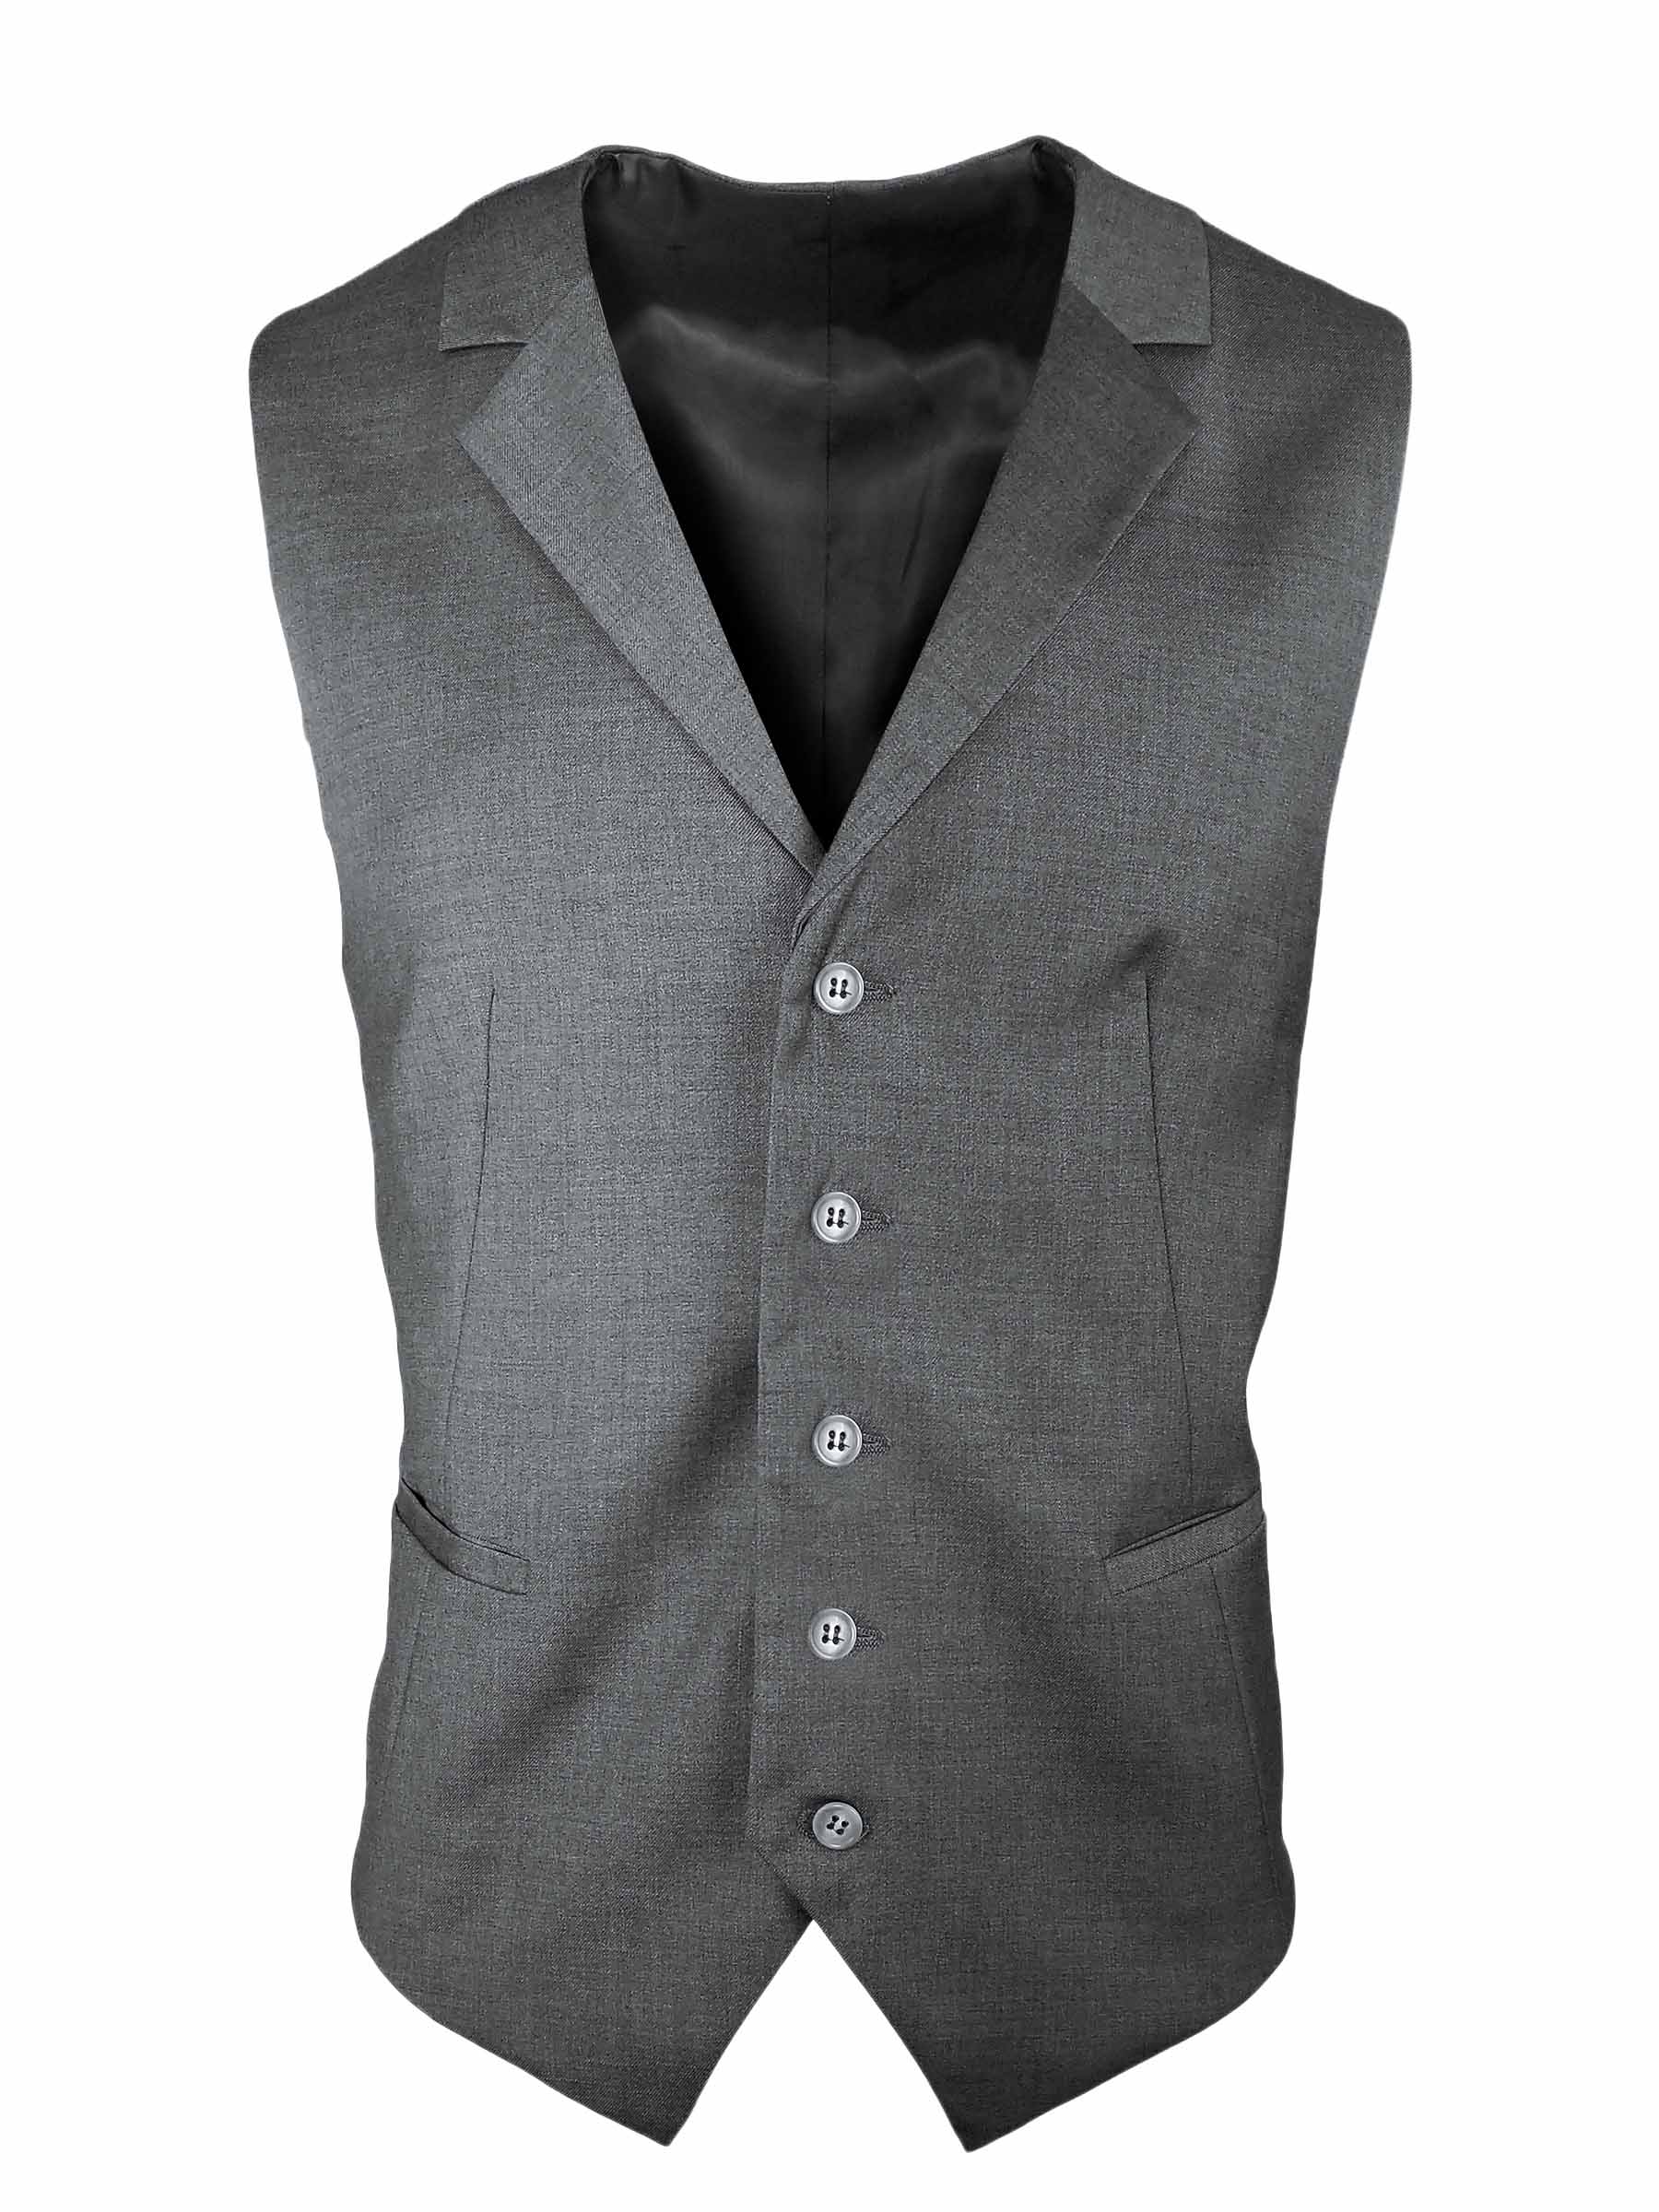 Men's Collared Vest - Light Grey Wool Blend - Uniform Edit